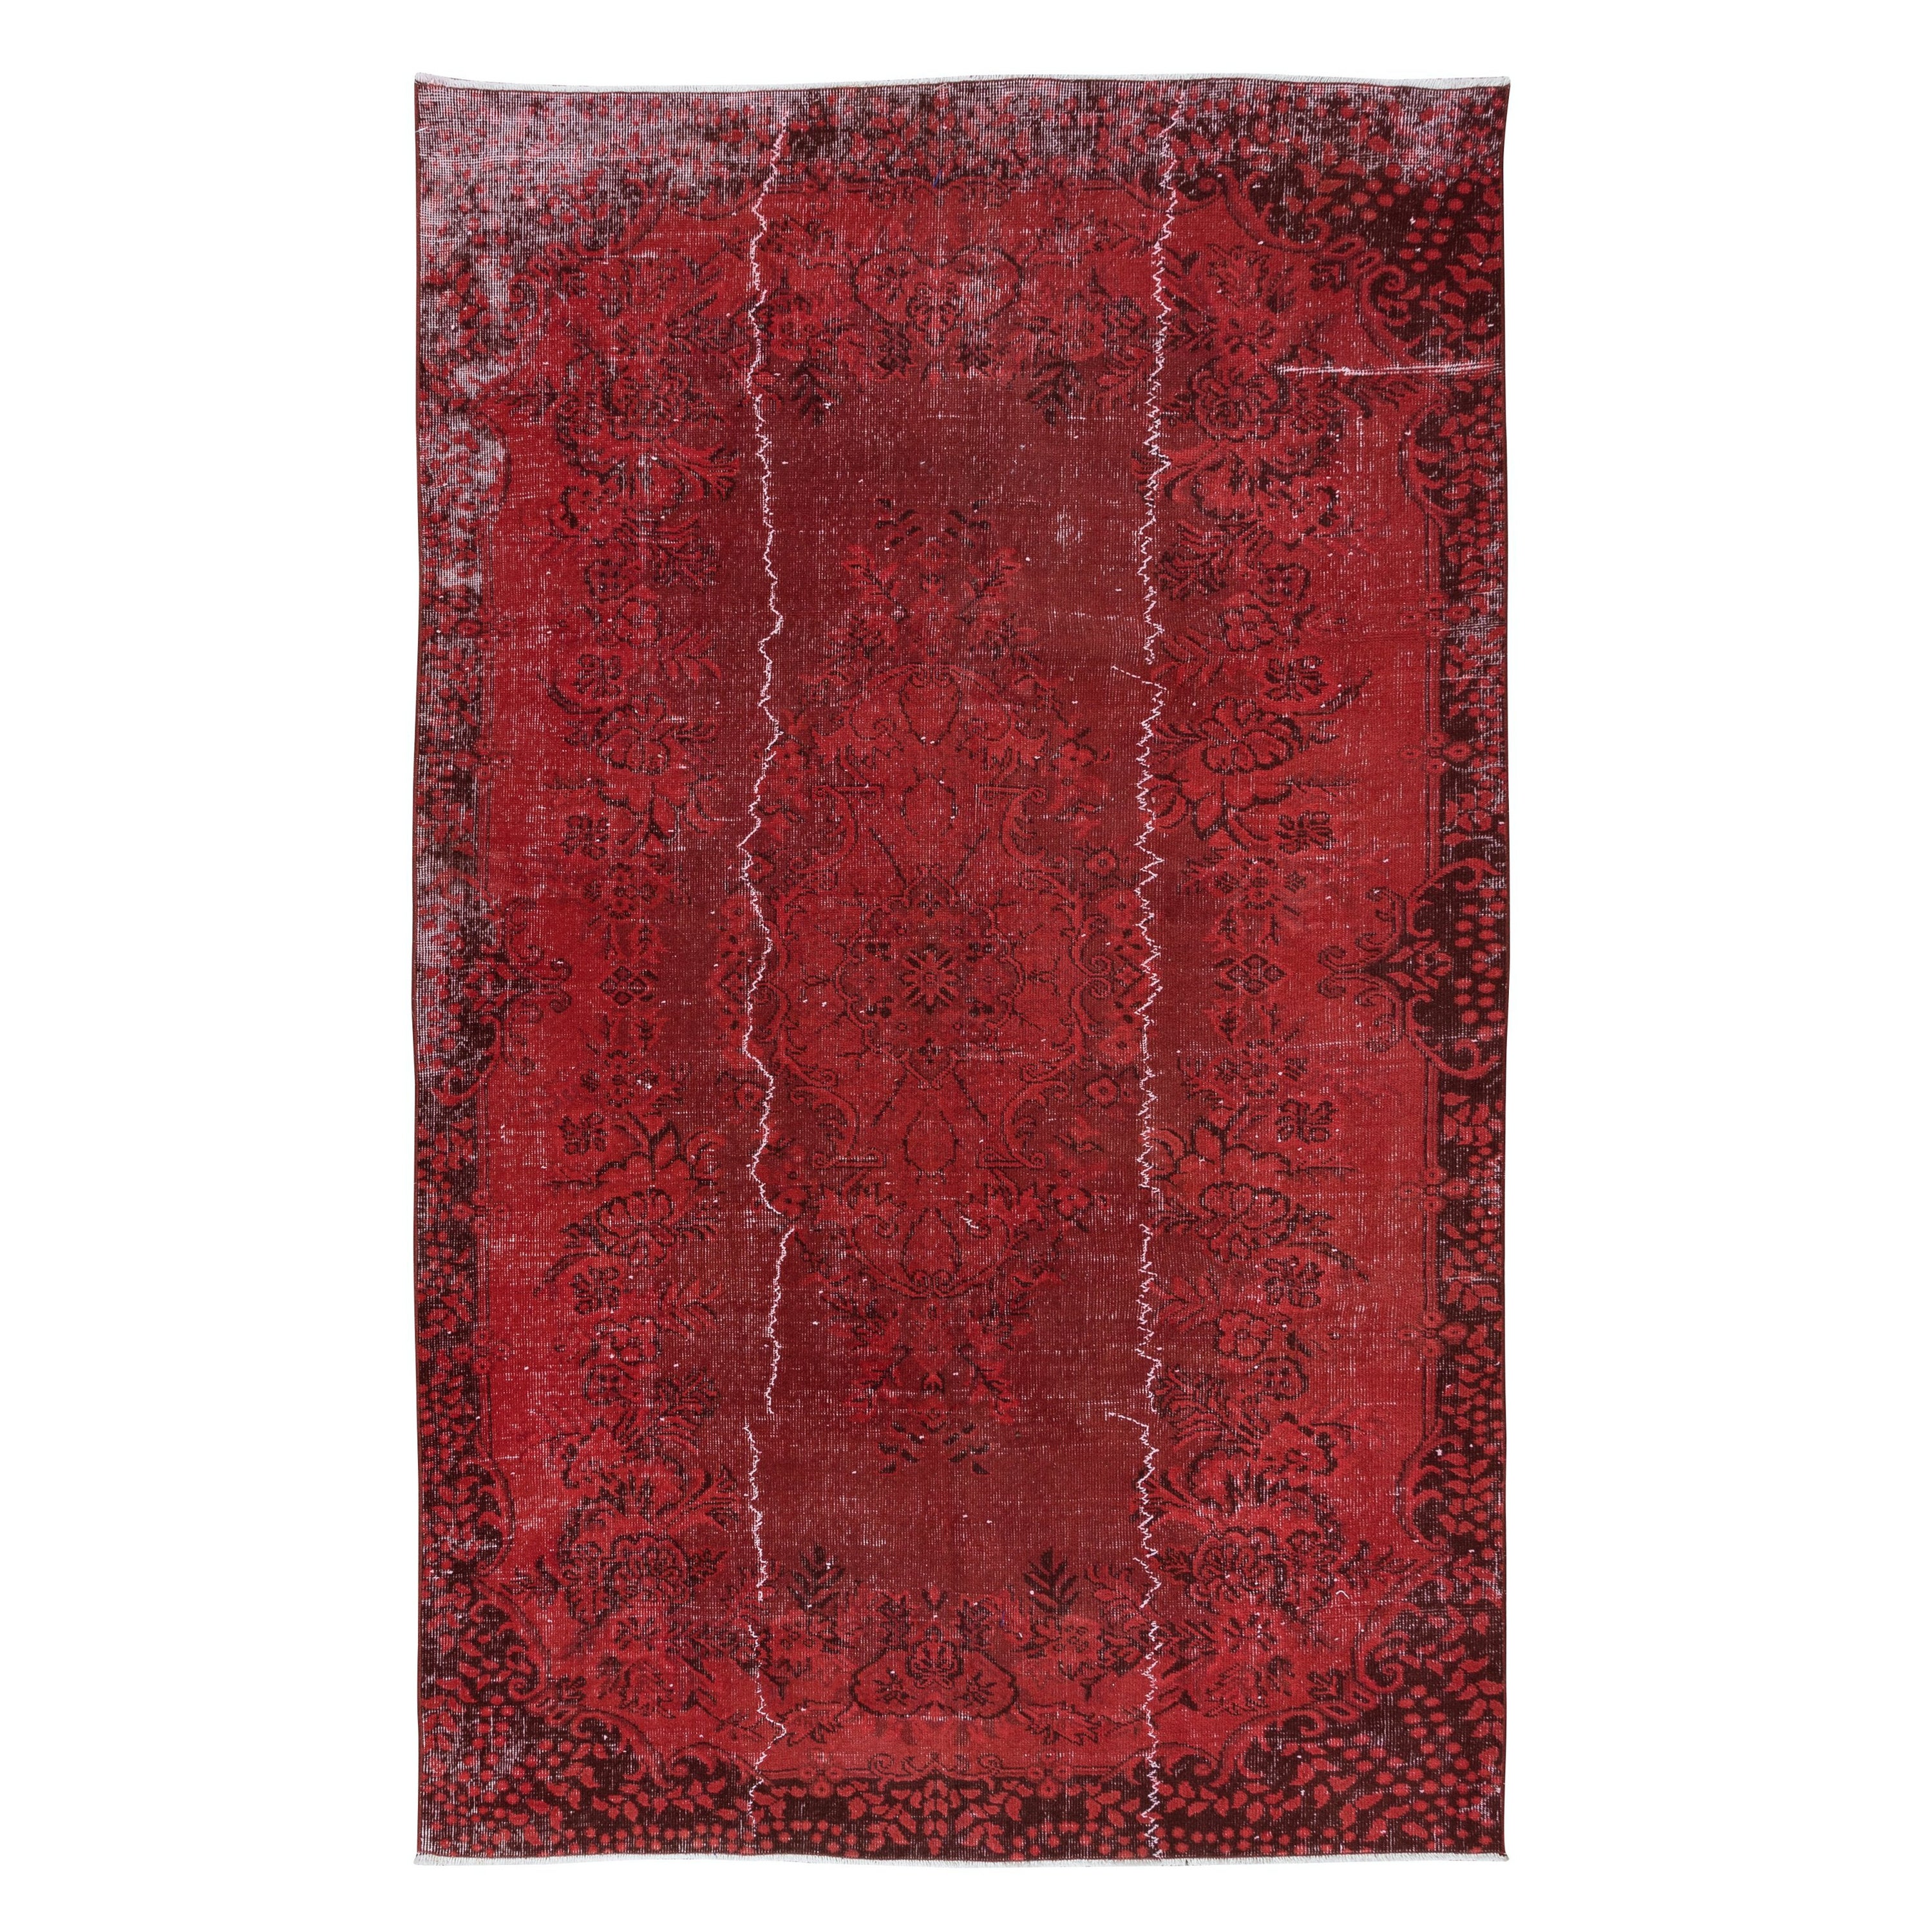 5.5x8.7 Ft Distressed Handmade Dark Red Rug, Turkish Carpet for Modern Interiors